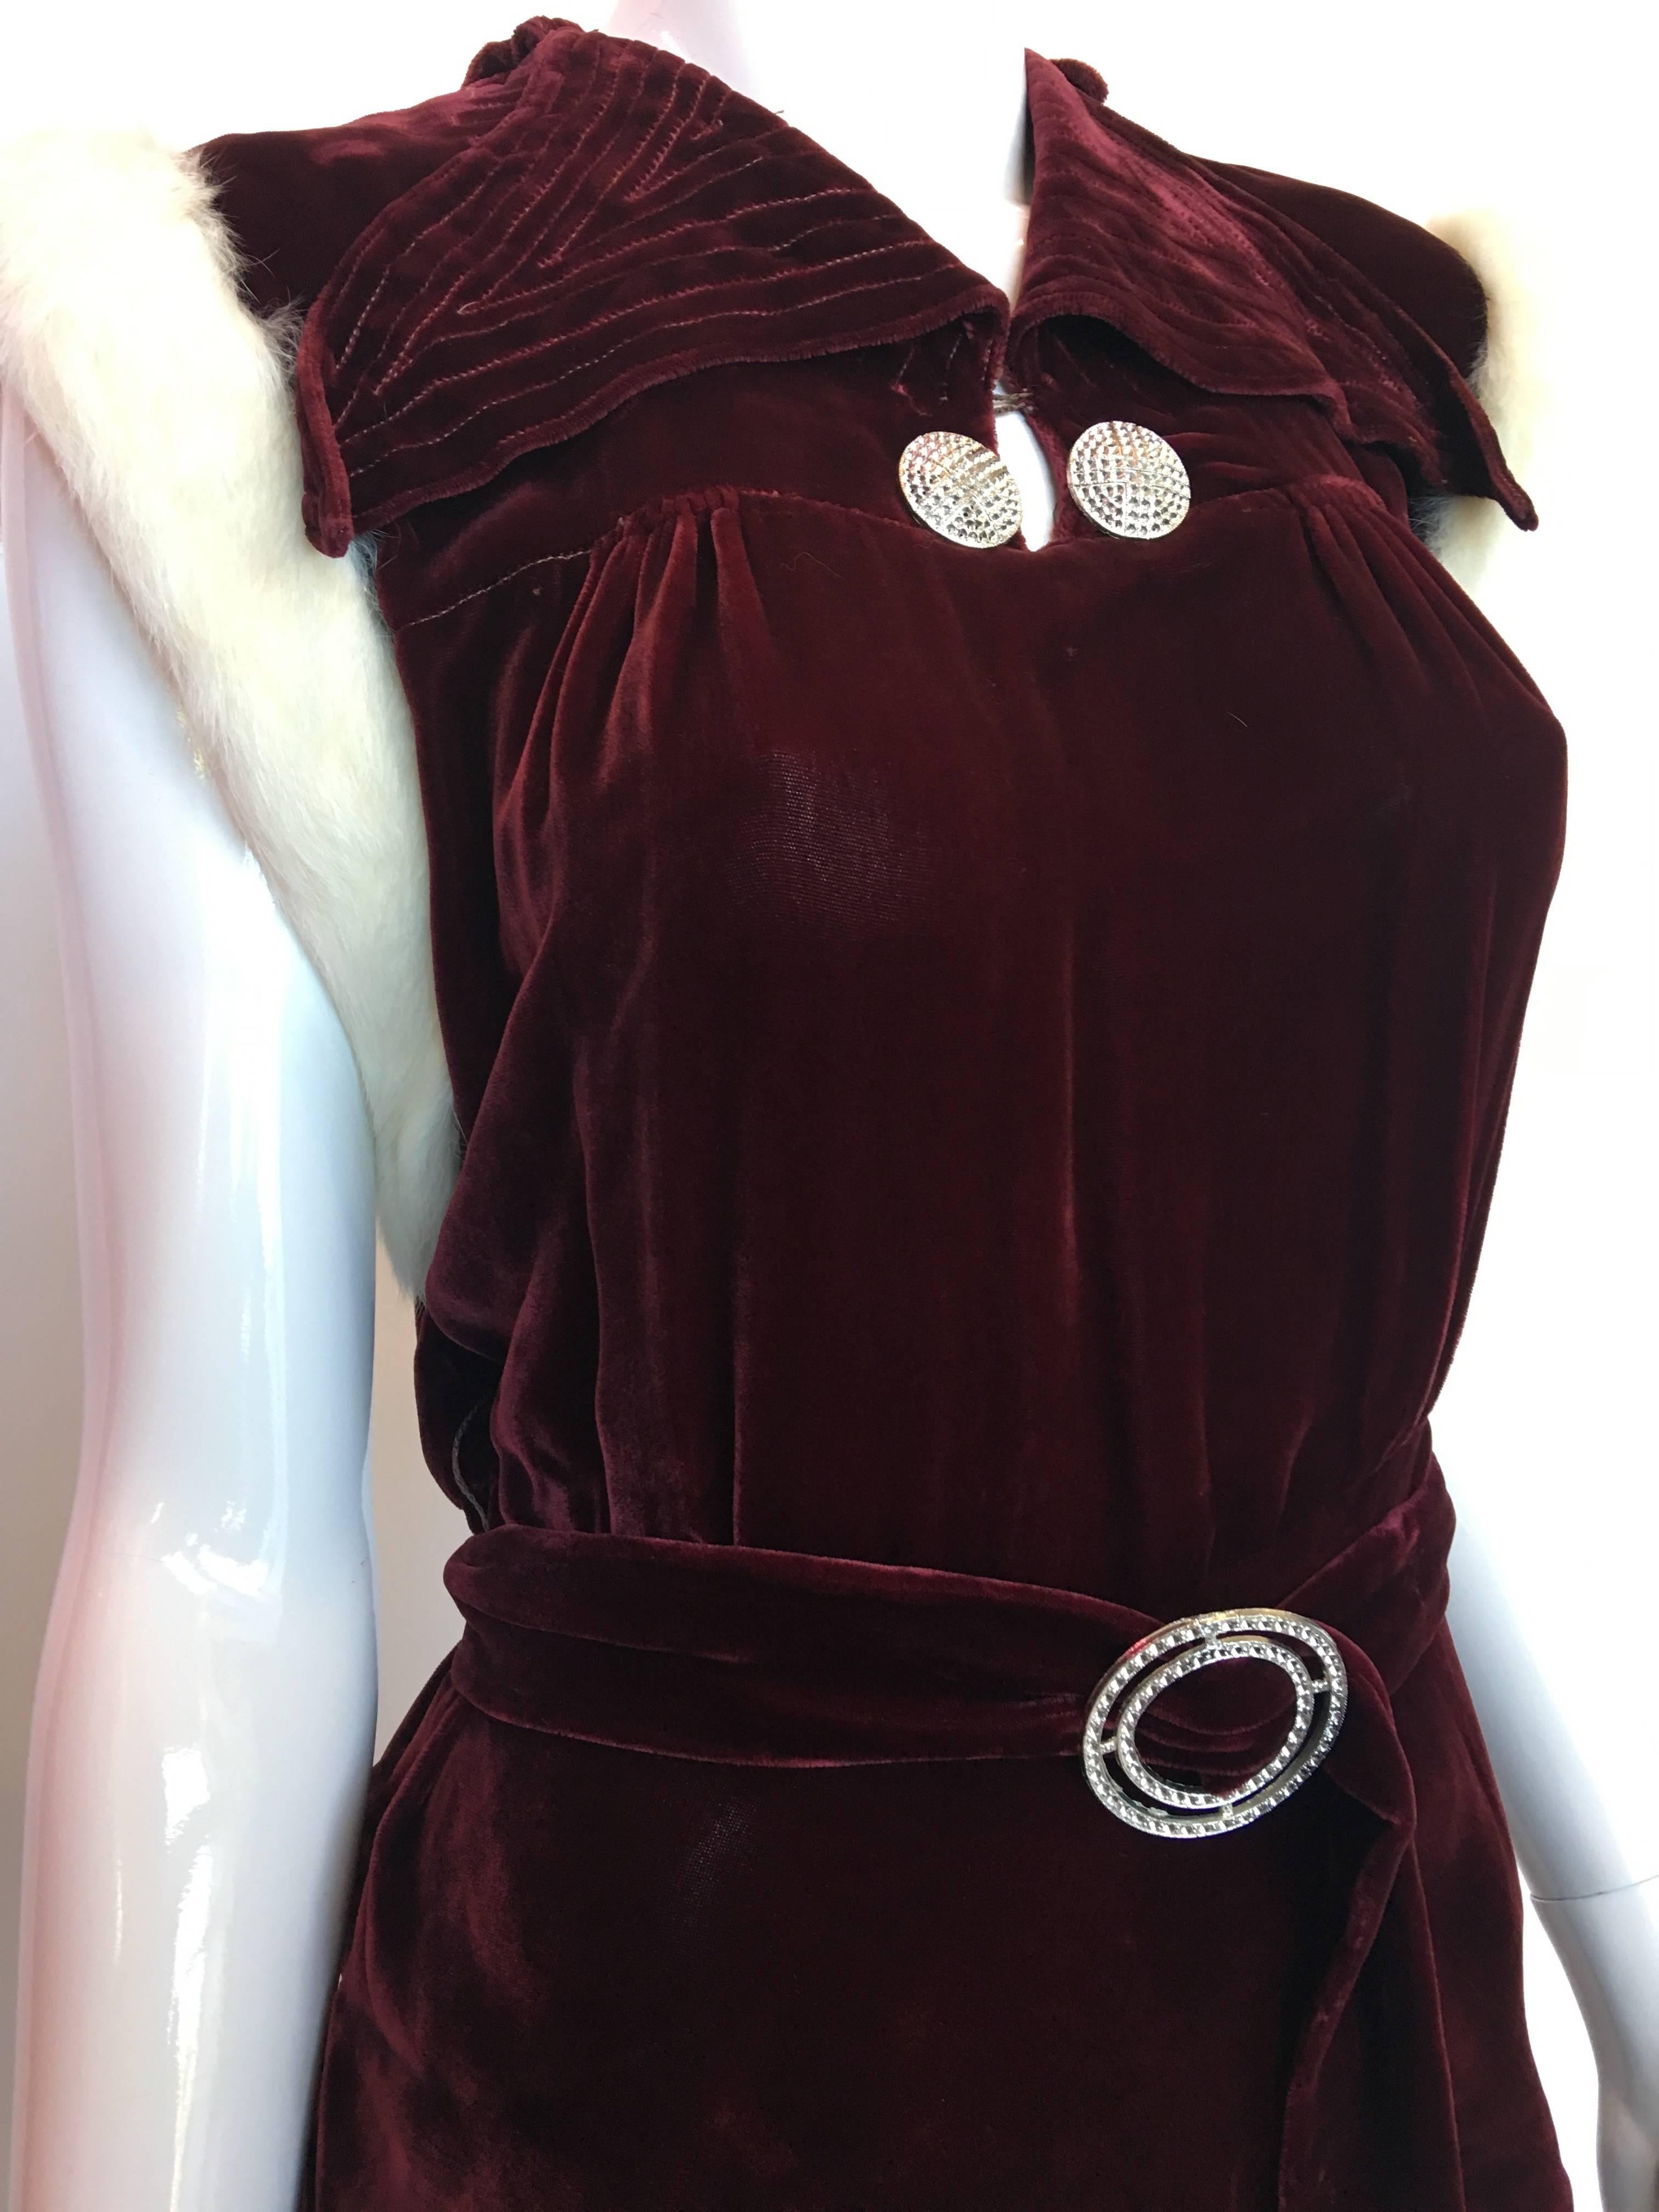 1930's Burgundy Velvet Dress with Rabbit Fur Trimmed Sleeves

Shoulders: 17